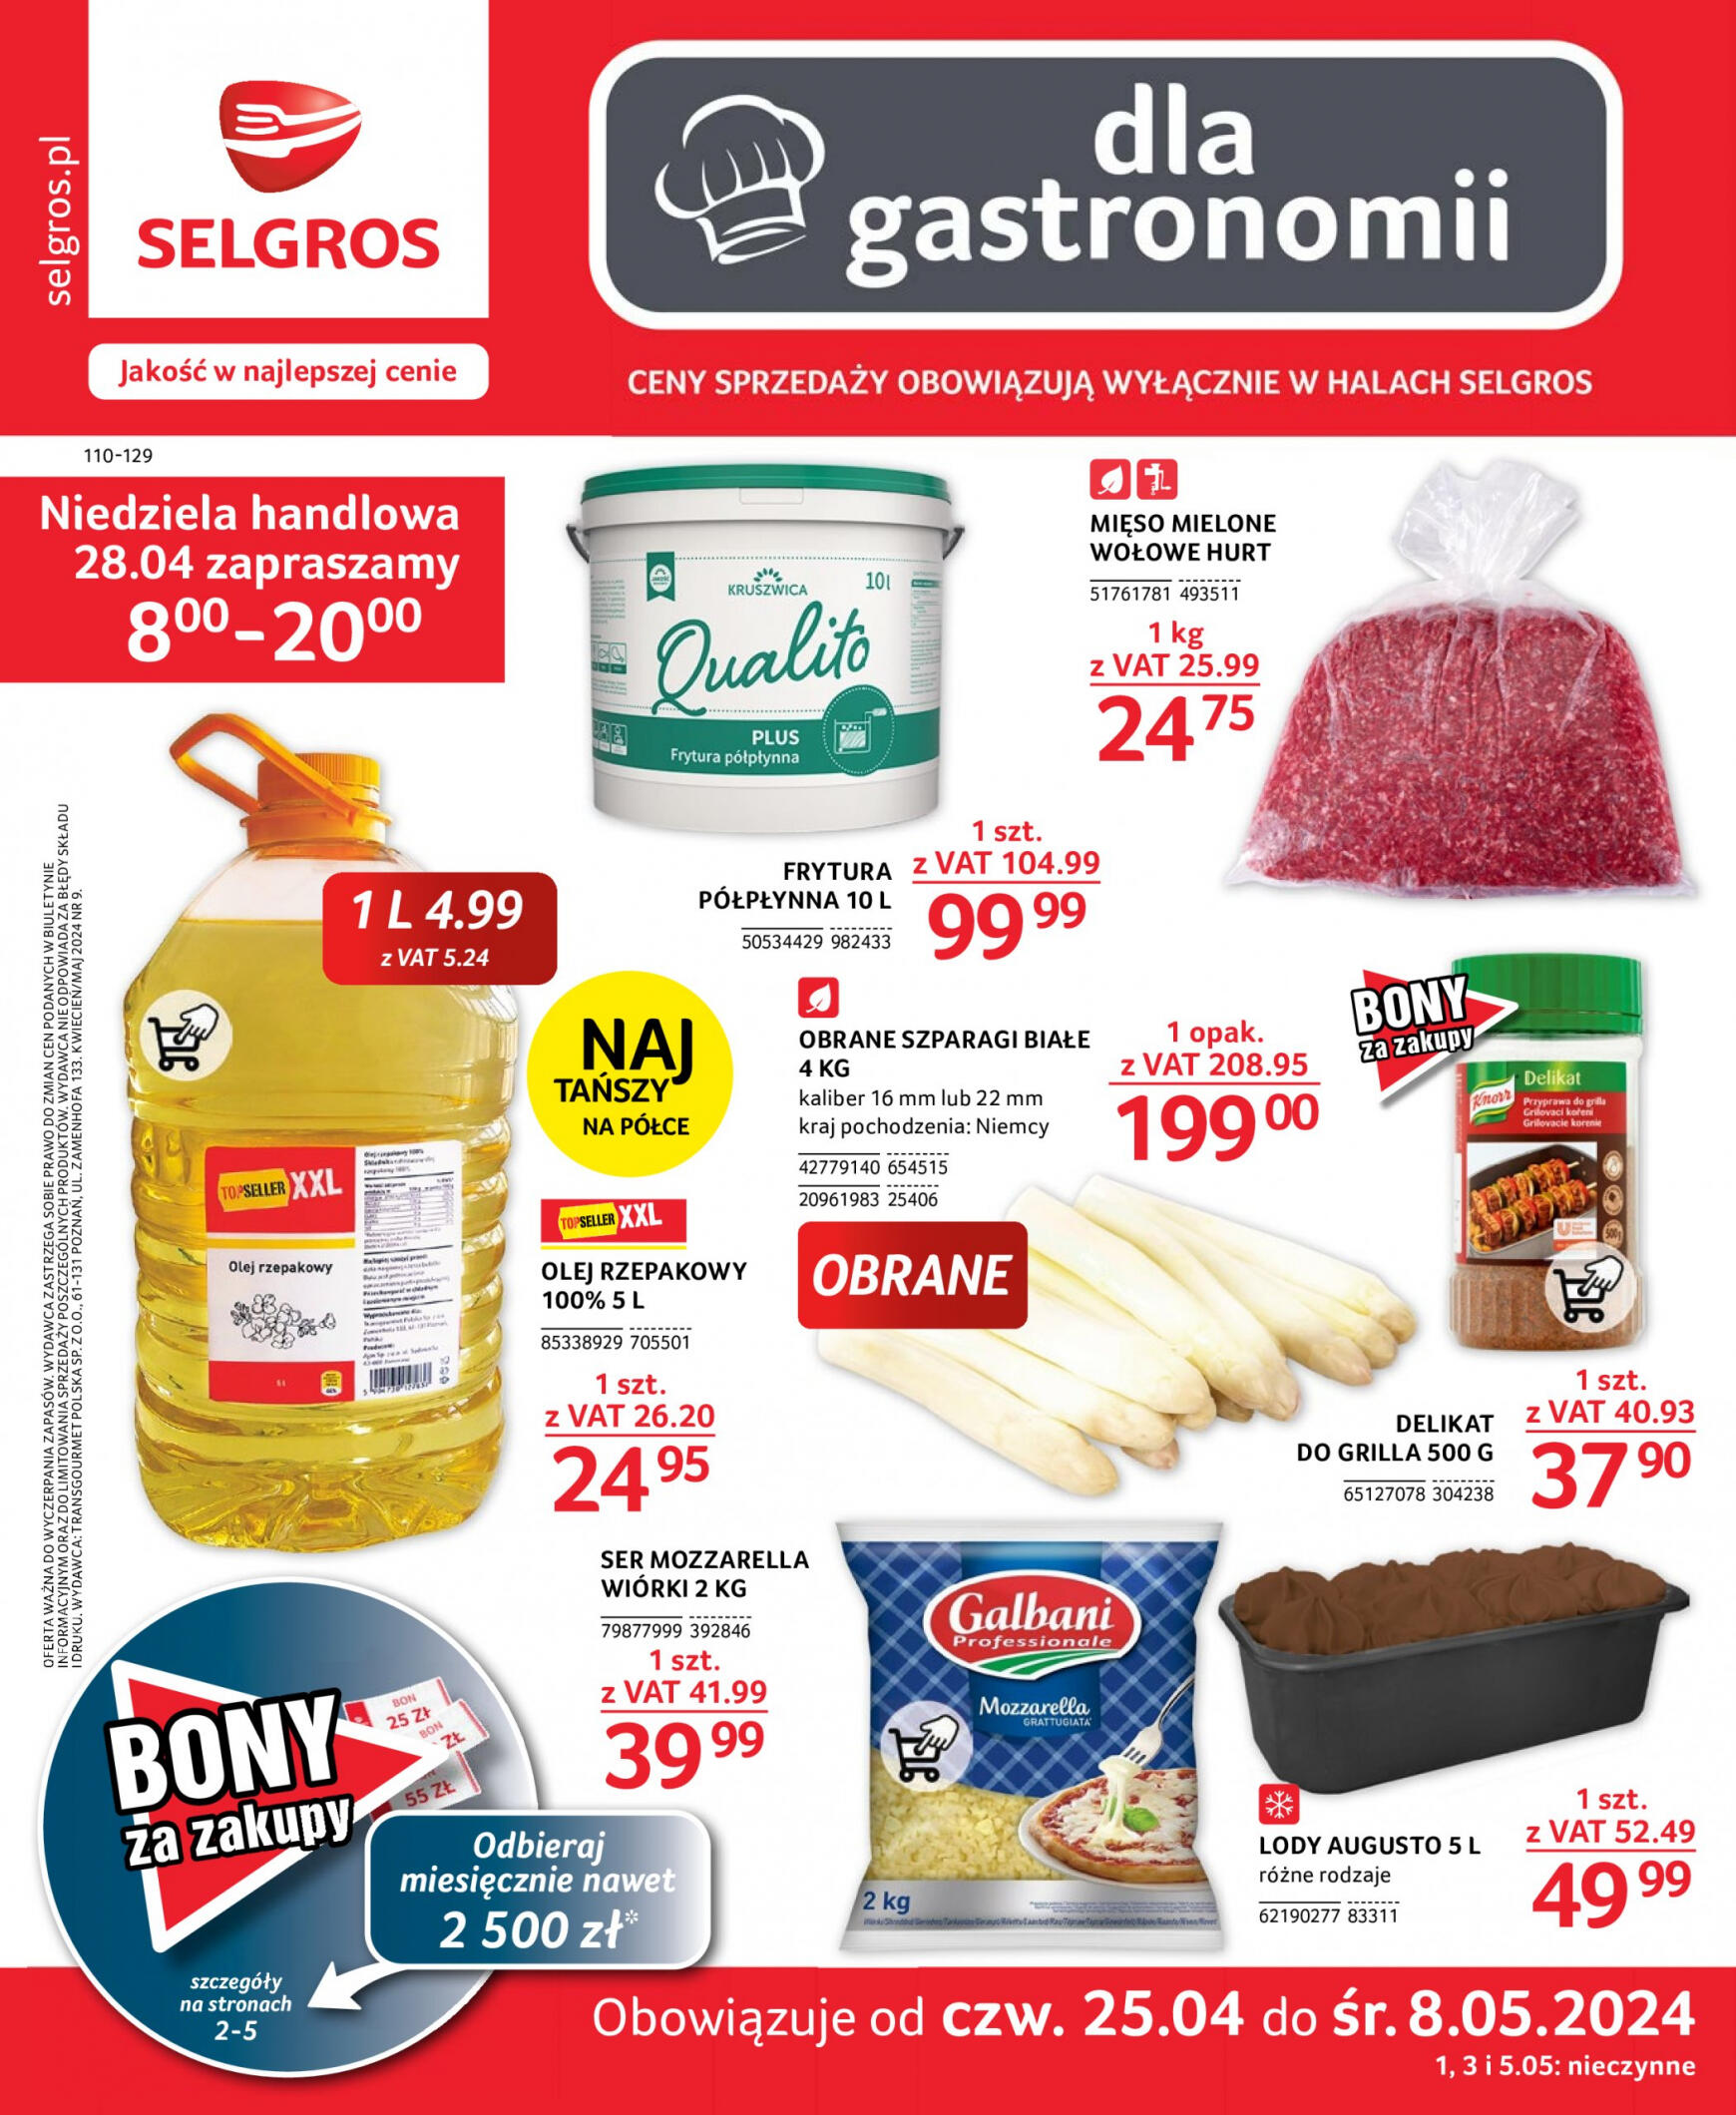 selgros - Selgros cash&carry - Oferta Gastronomia gazetka aktualna ważna od 25.04. - 08.05. - page: 1